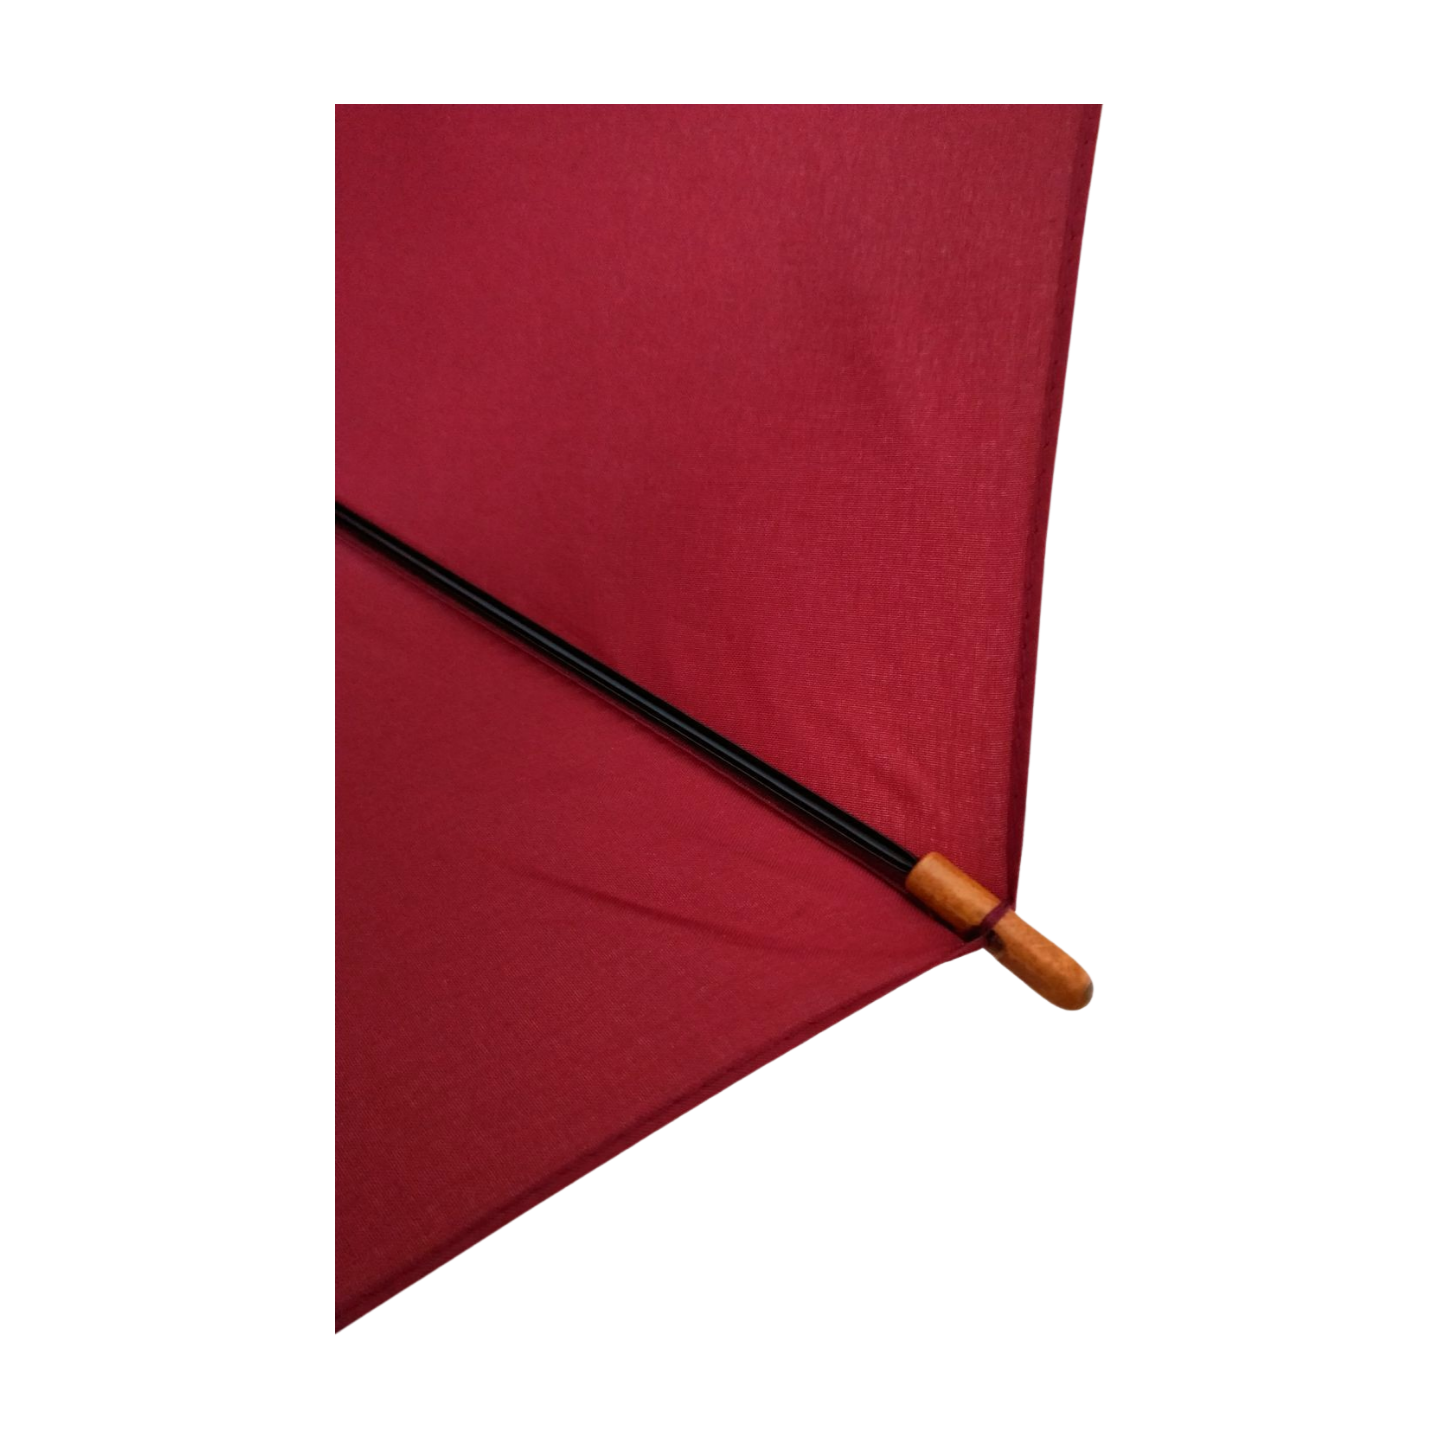 https://www.hodaumbrella.com/46-inch-wood-straight-umbrella-product/